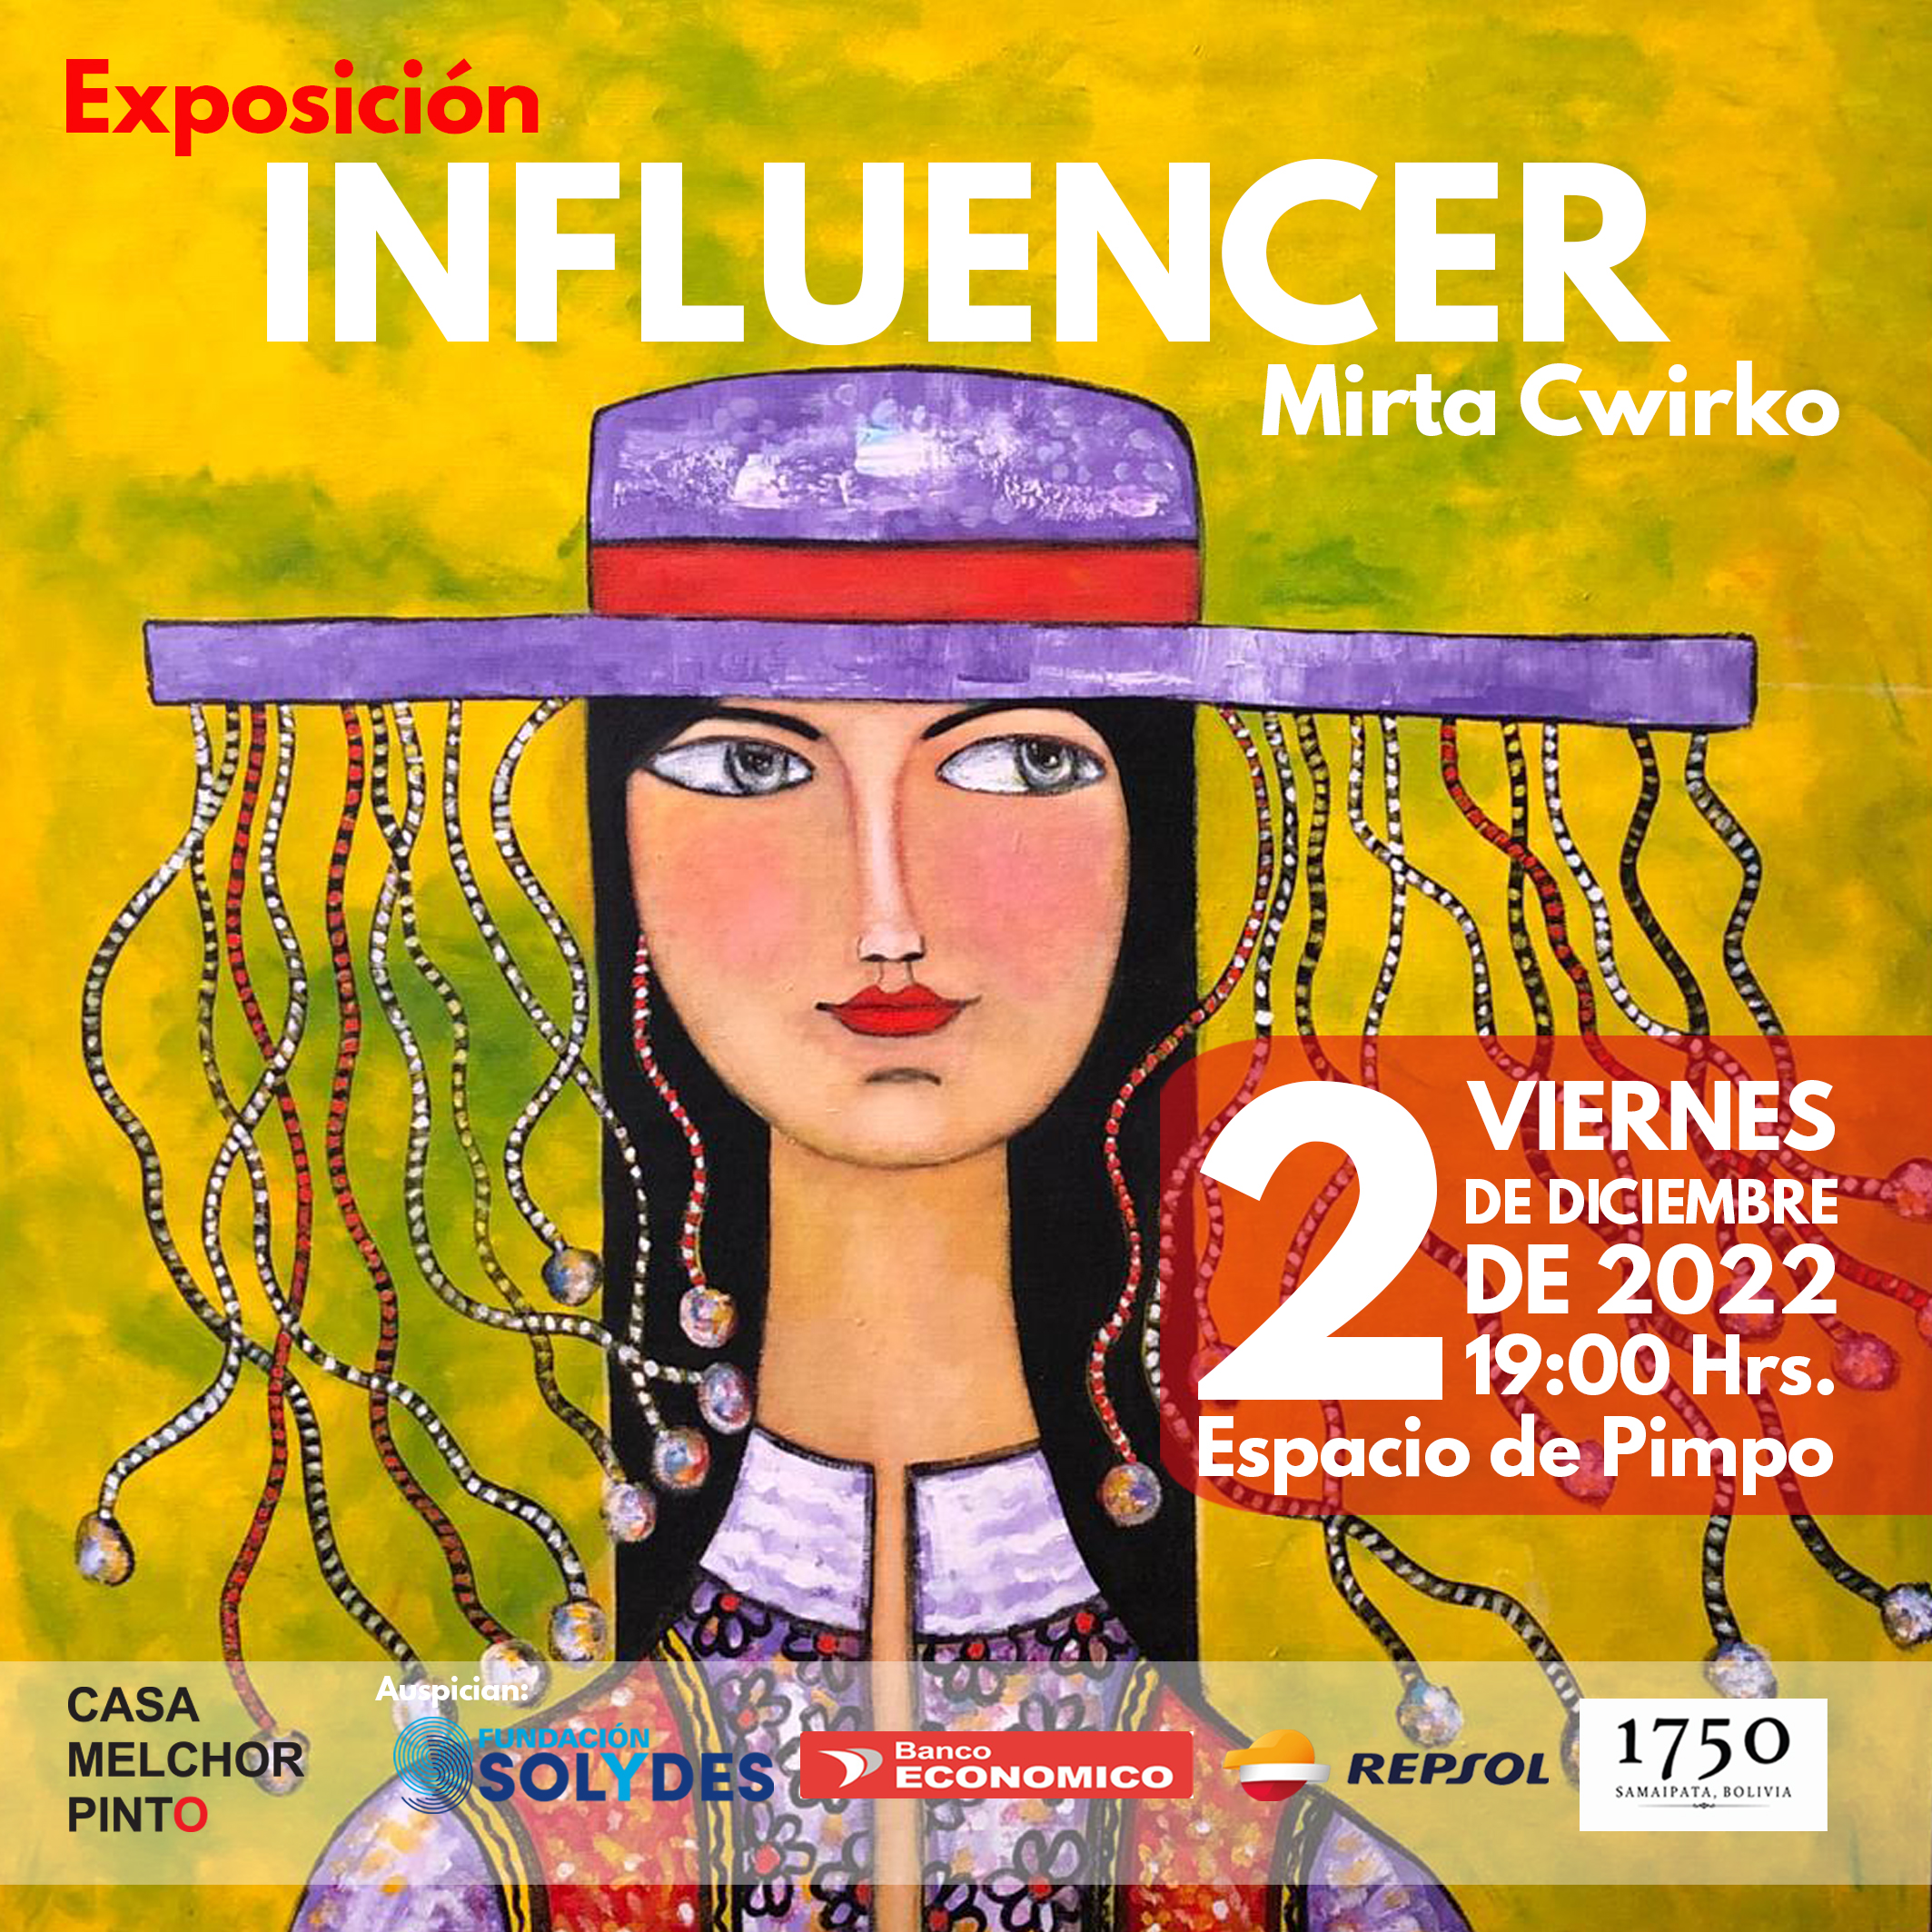 Expo influencer 02 dic 2022 cwirko